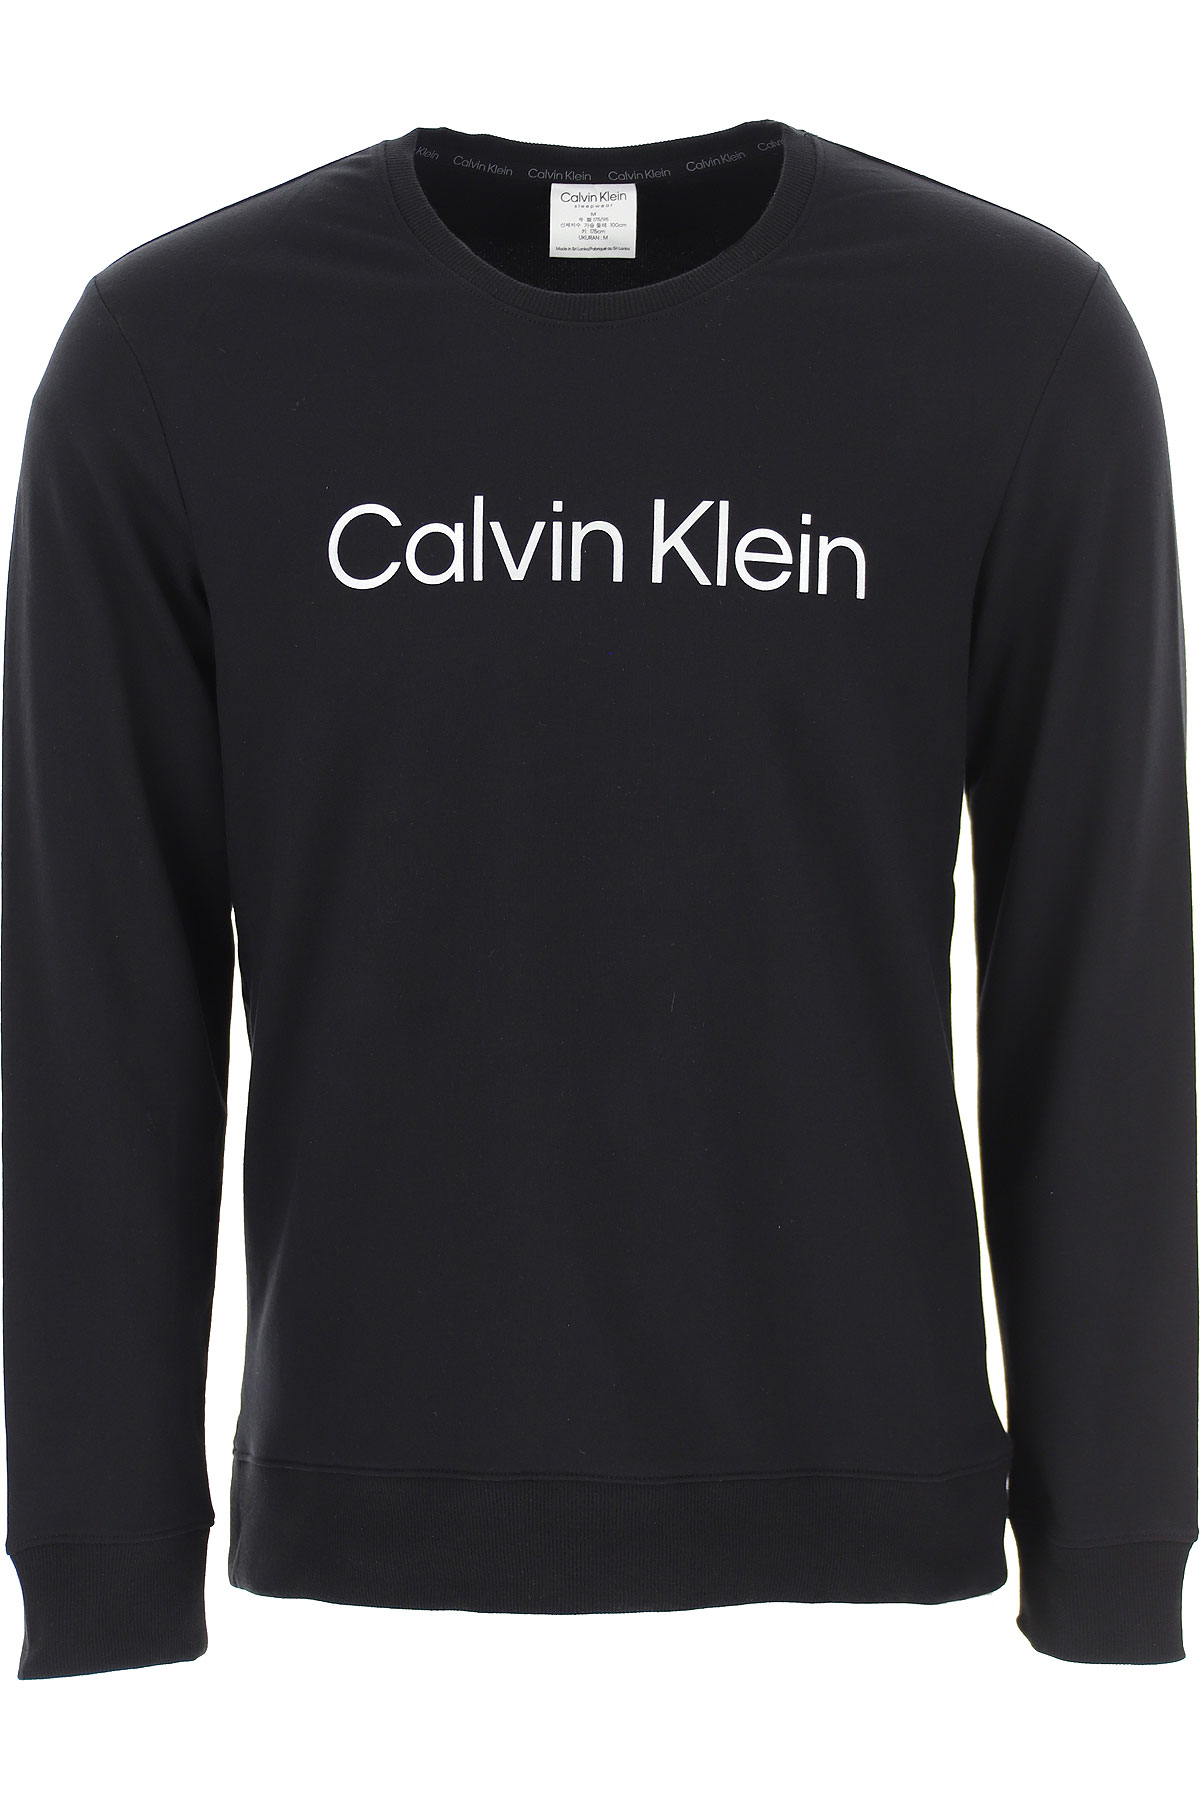 Mens Clothing Calvin Klein, Style code: nm2265e-ub1-